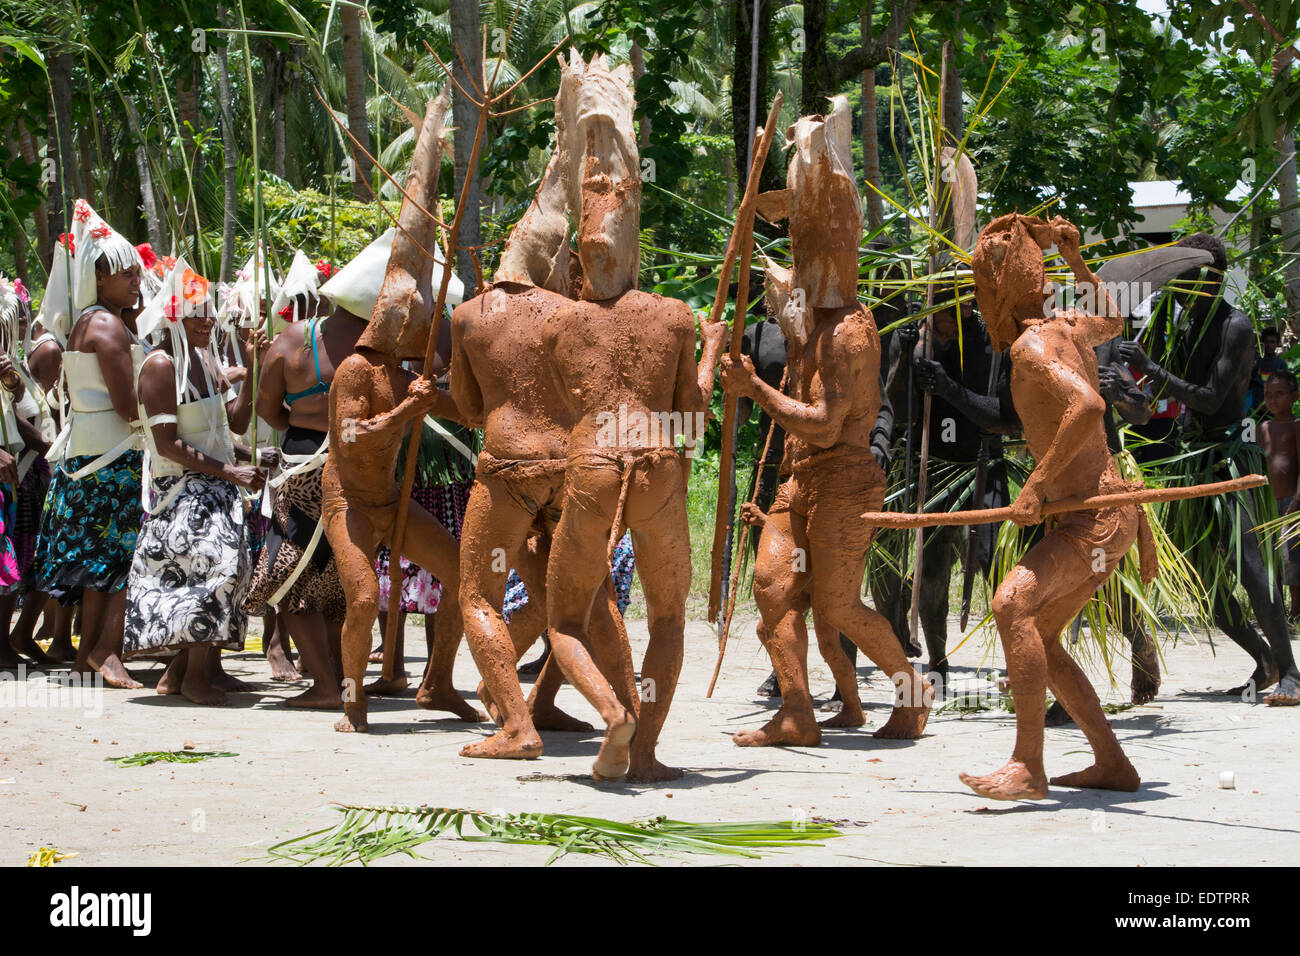 La Melanesia, Isole Salomone, isola di Owaraha o Owa Raha (precedentemente noto come Santa Ana), Gupuna aka Ghupuna. Gli uomini di fango. Foto Stock